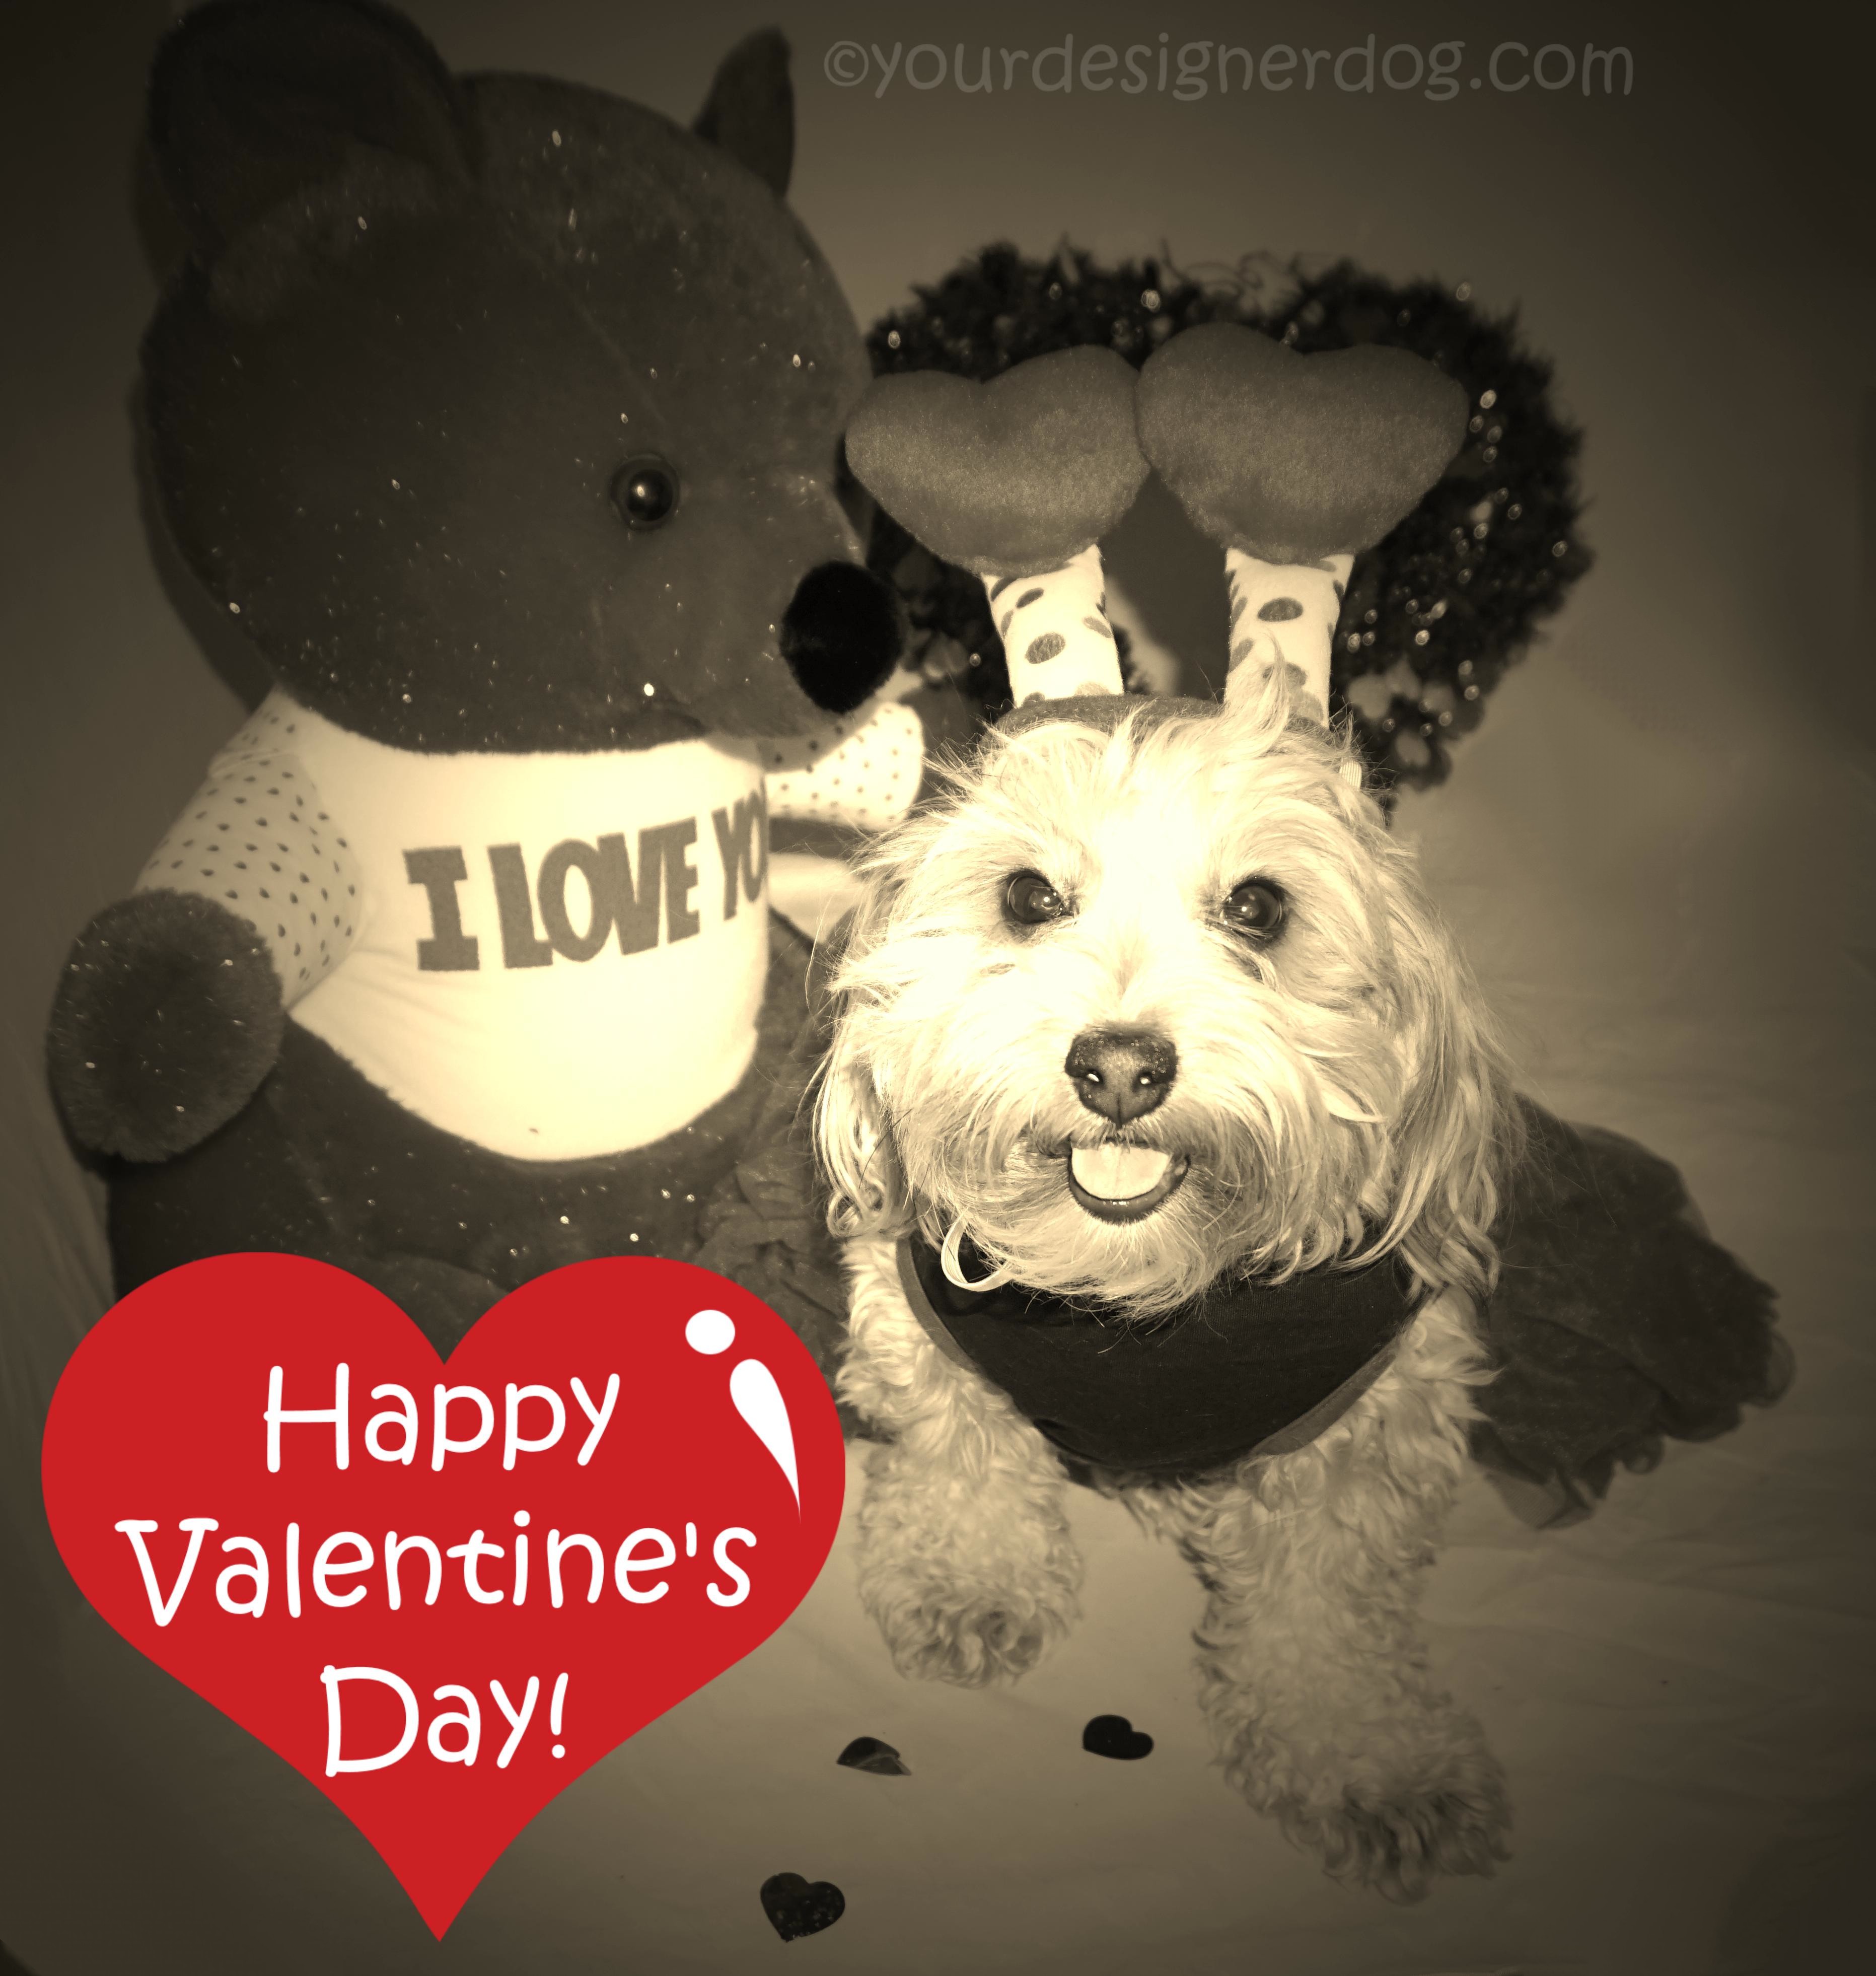 dogs, designer dogs, yorkipoo, yorkie poo, love, heart, valentine's day, love bug